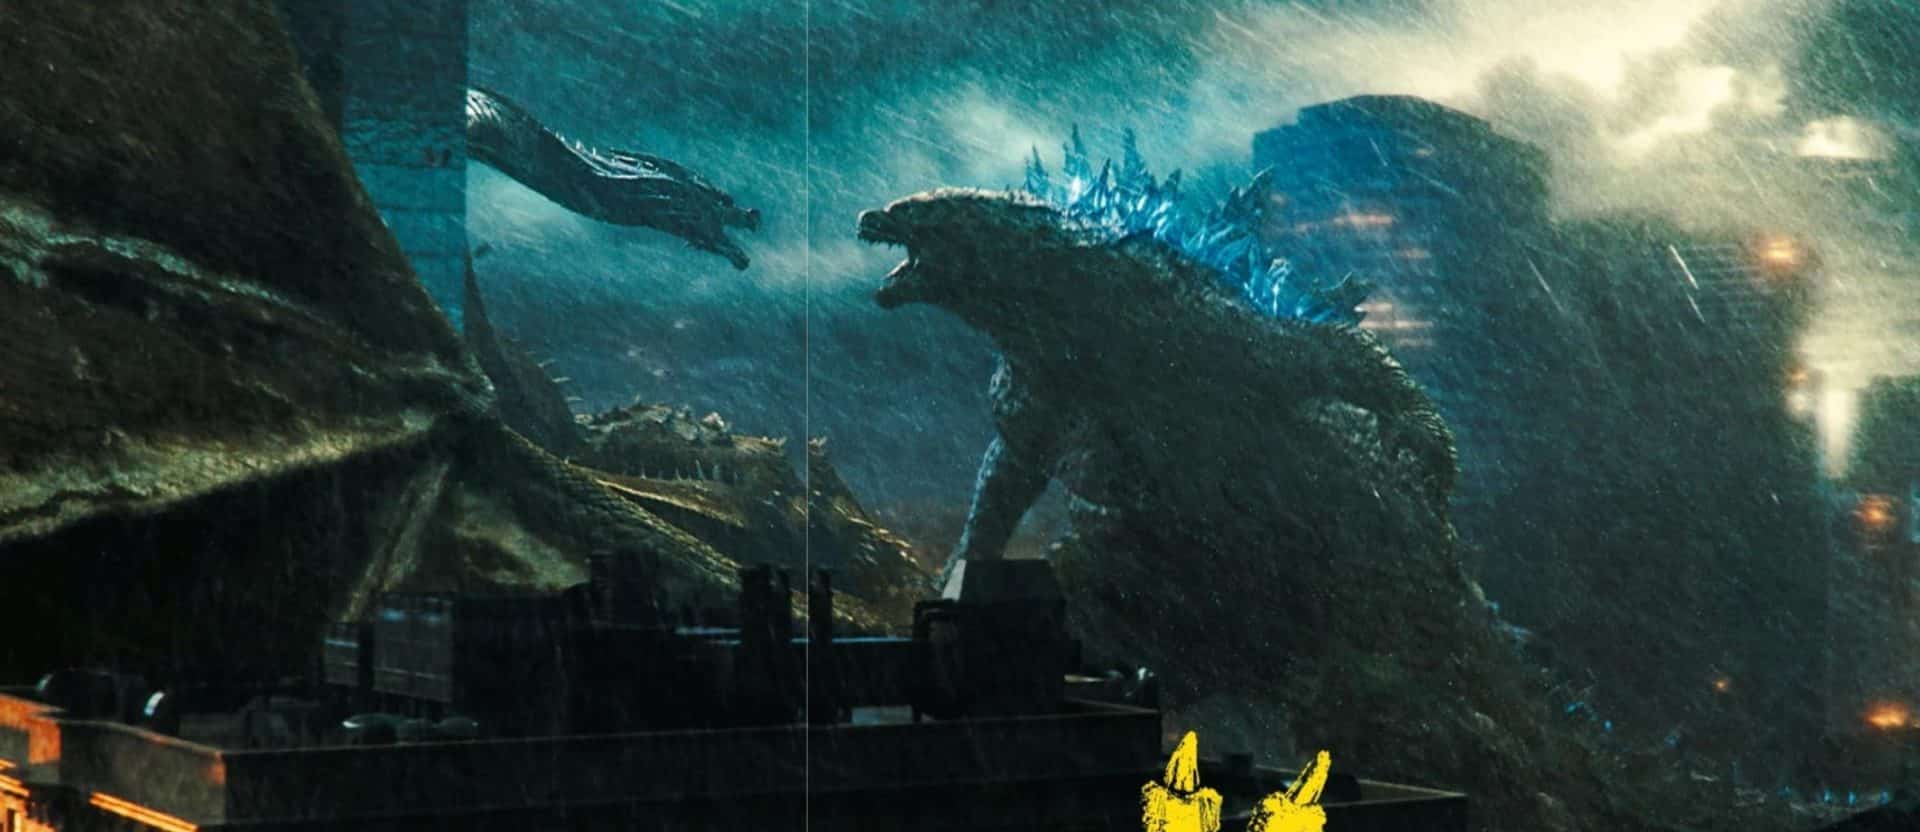 Godzilla II - King of the monsters cinematographe.it